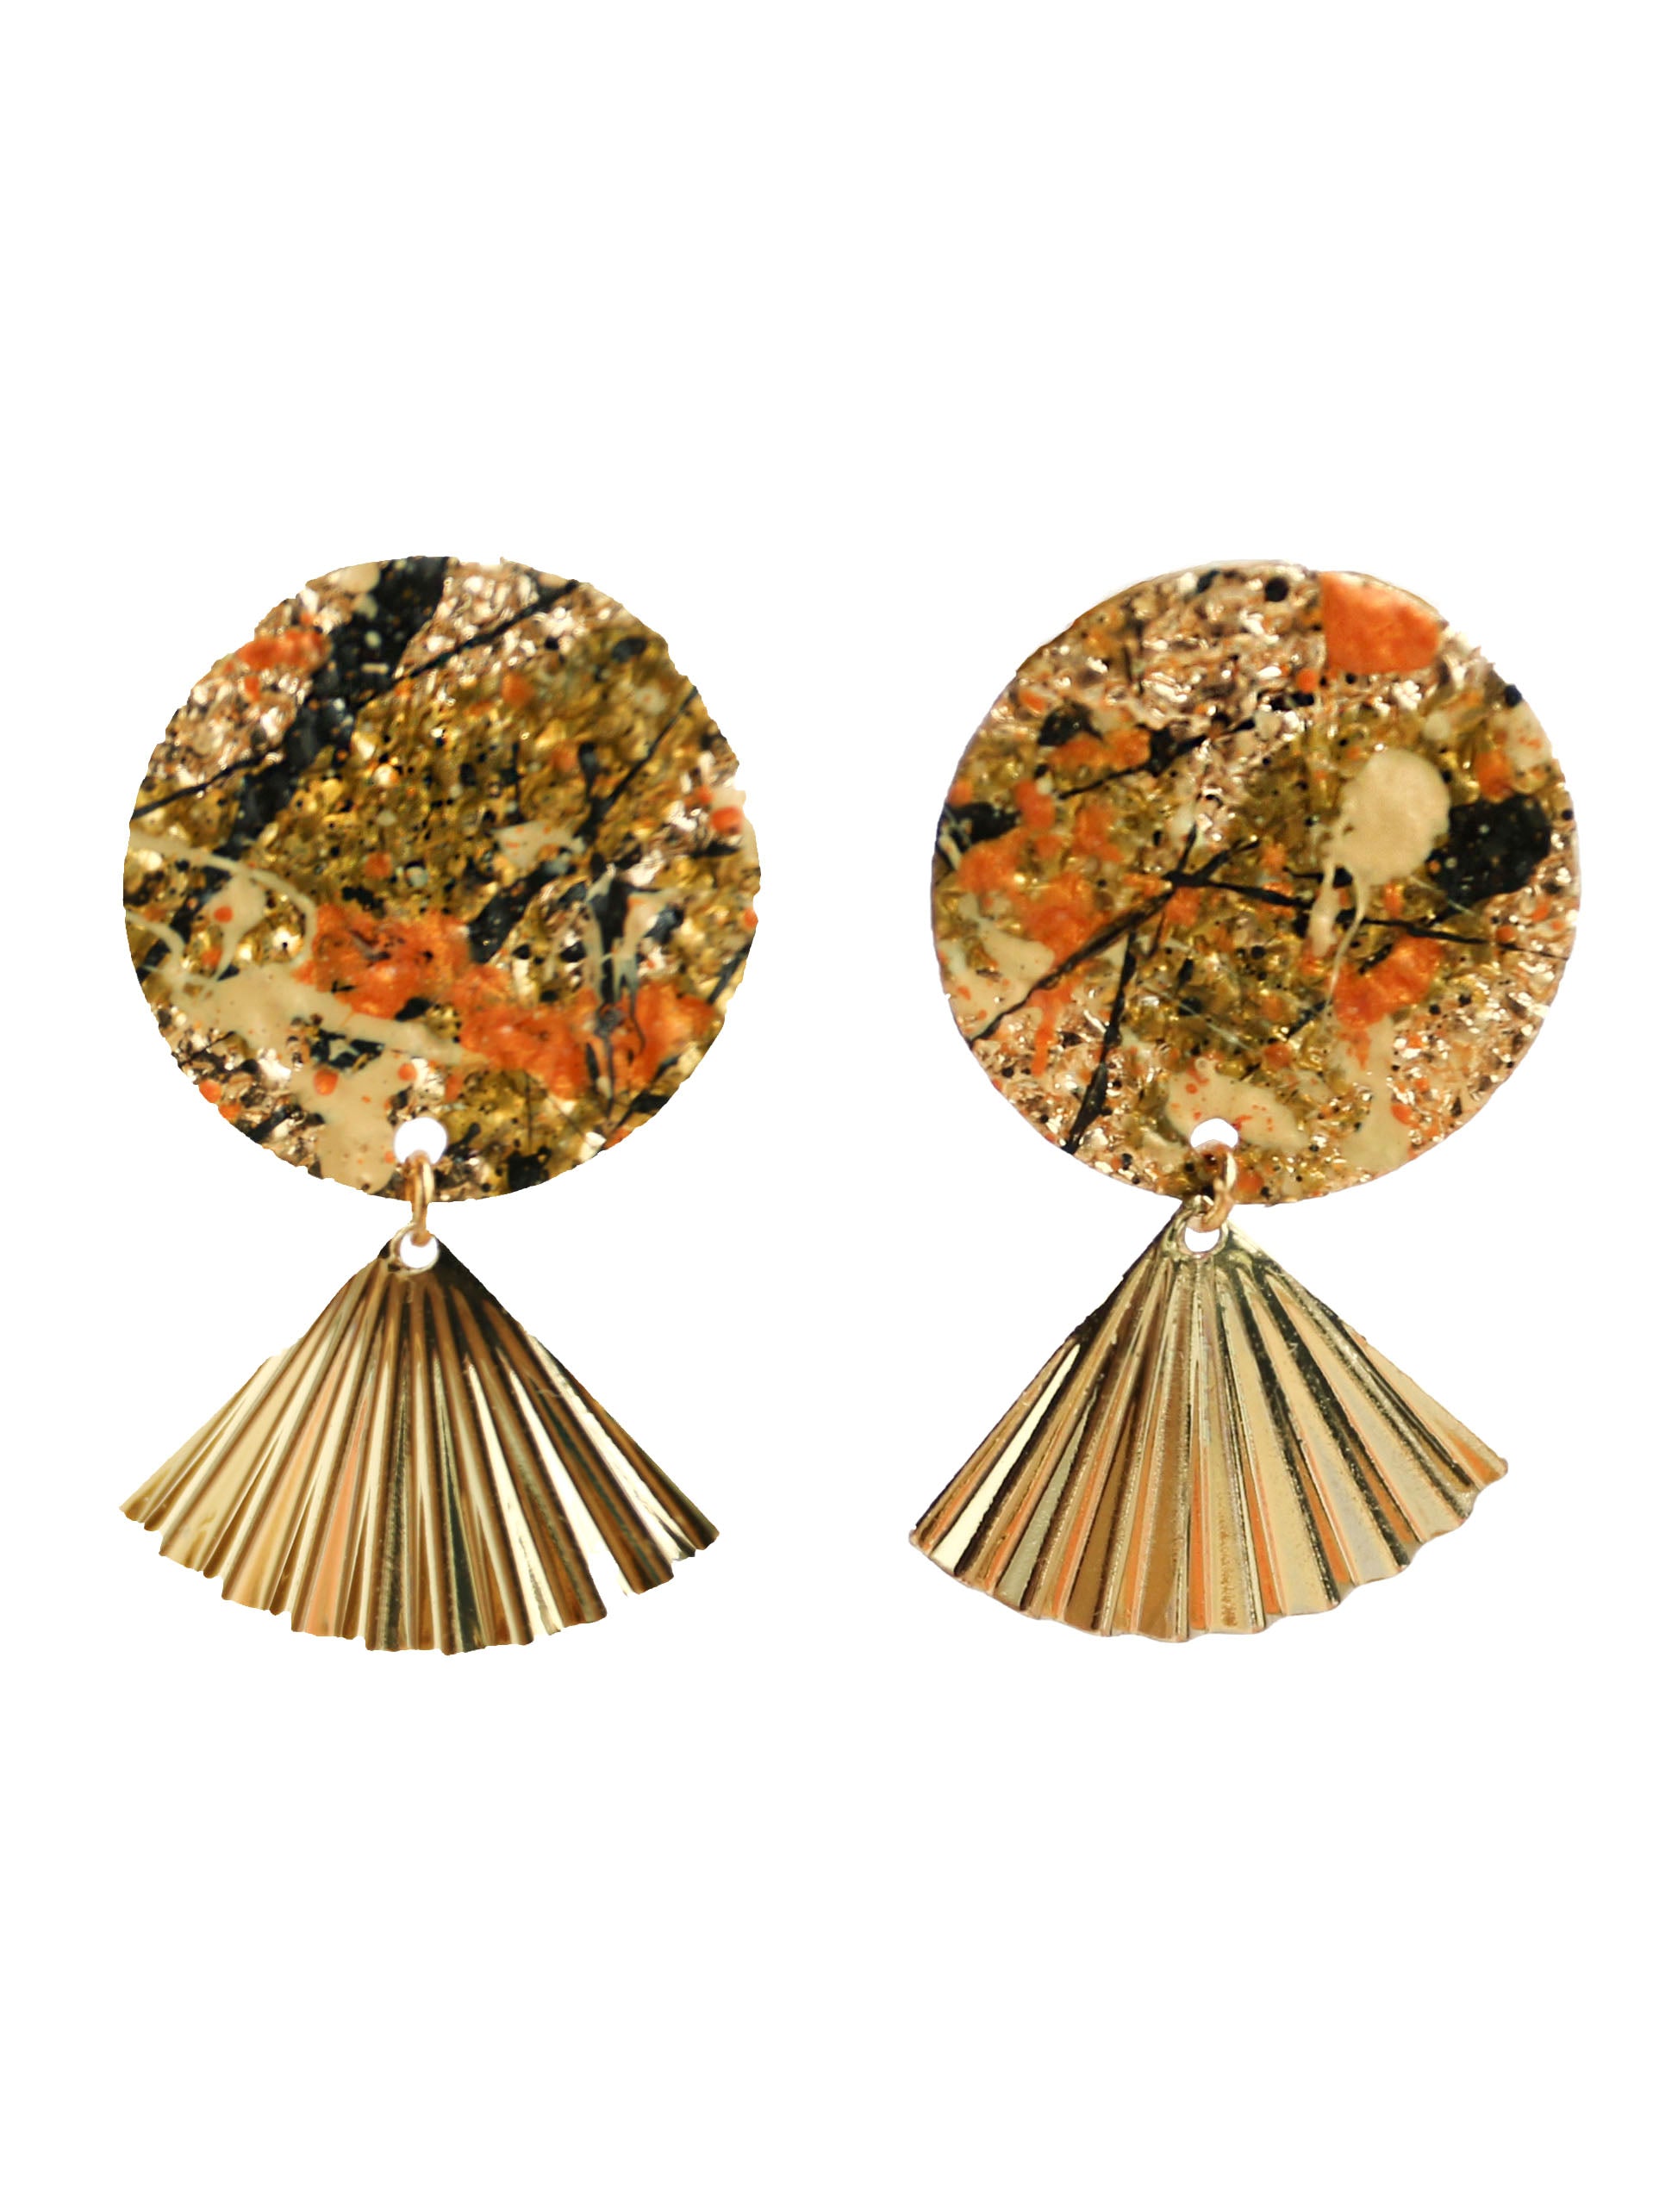 Pollock-Golden Temperament Vintage Handmade Earrings+Golden Fan-Shaped